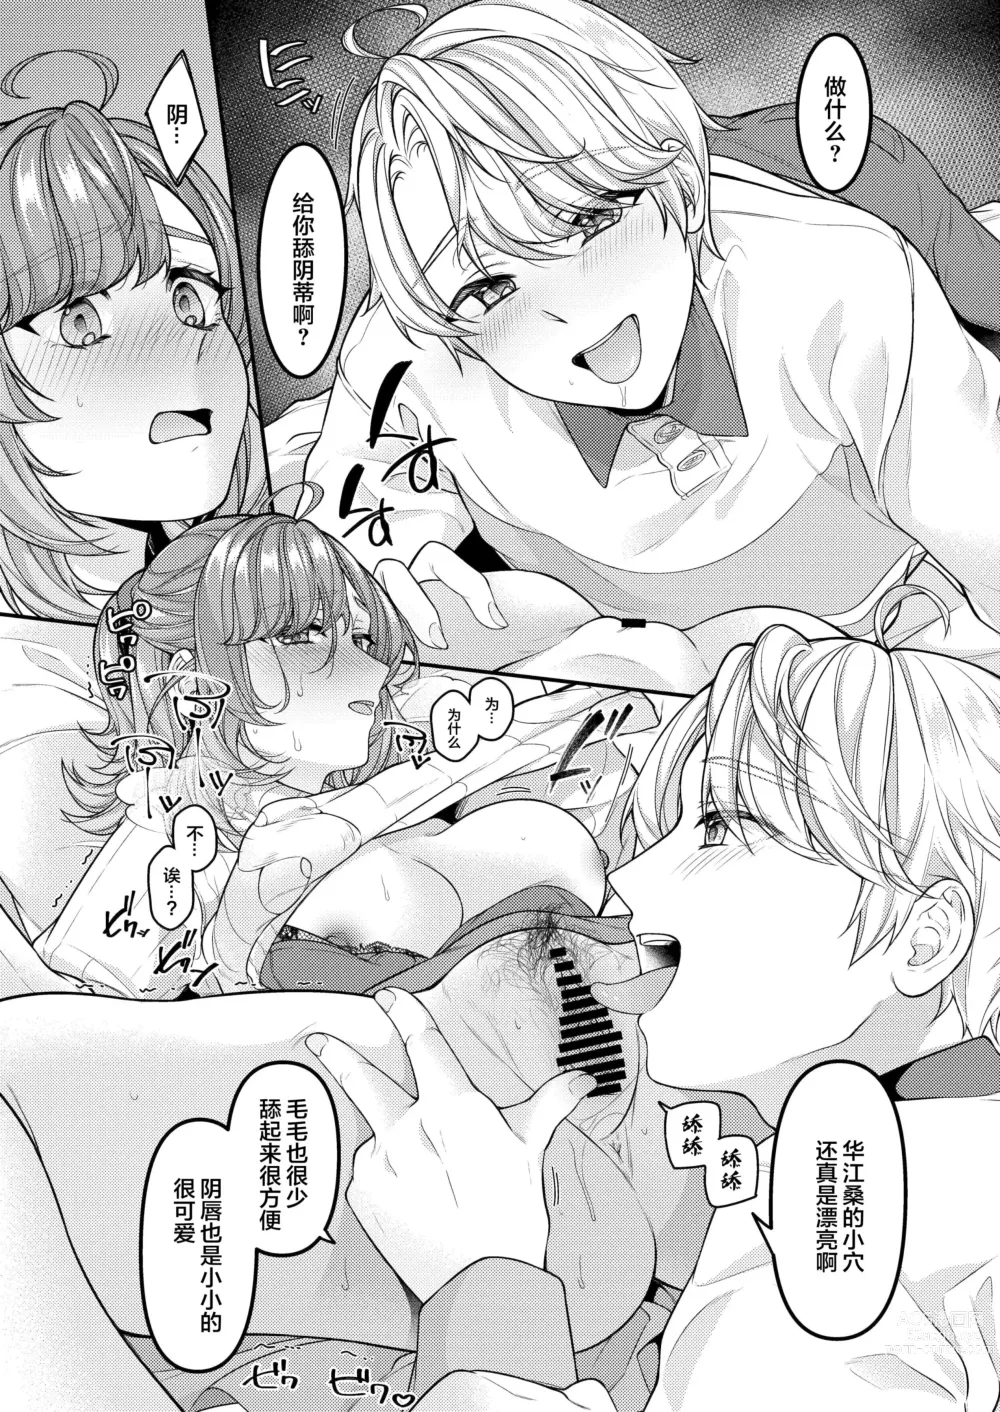 Page 9 of doujinshi Okaa-san, Mamakatsu ni Hamattemasu - Im addicted to feeling good with young guys.